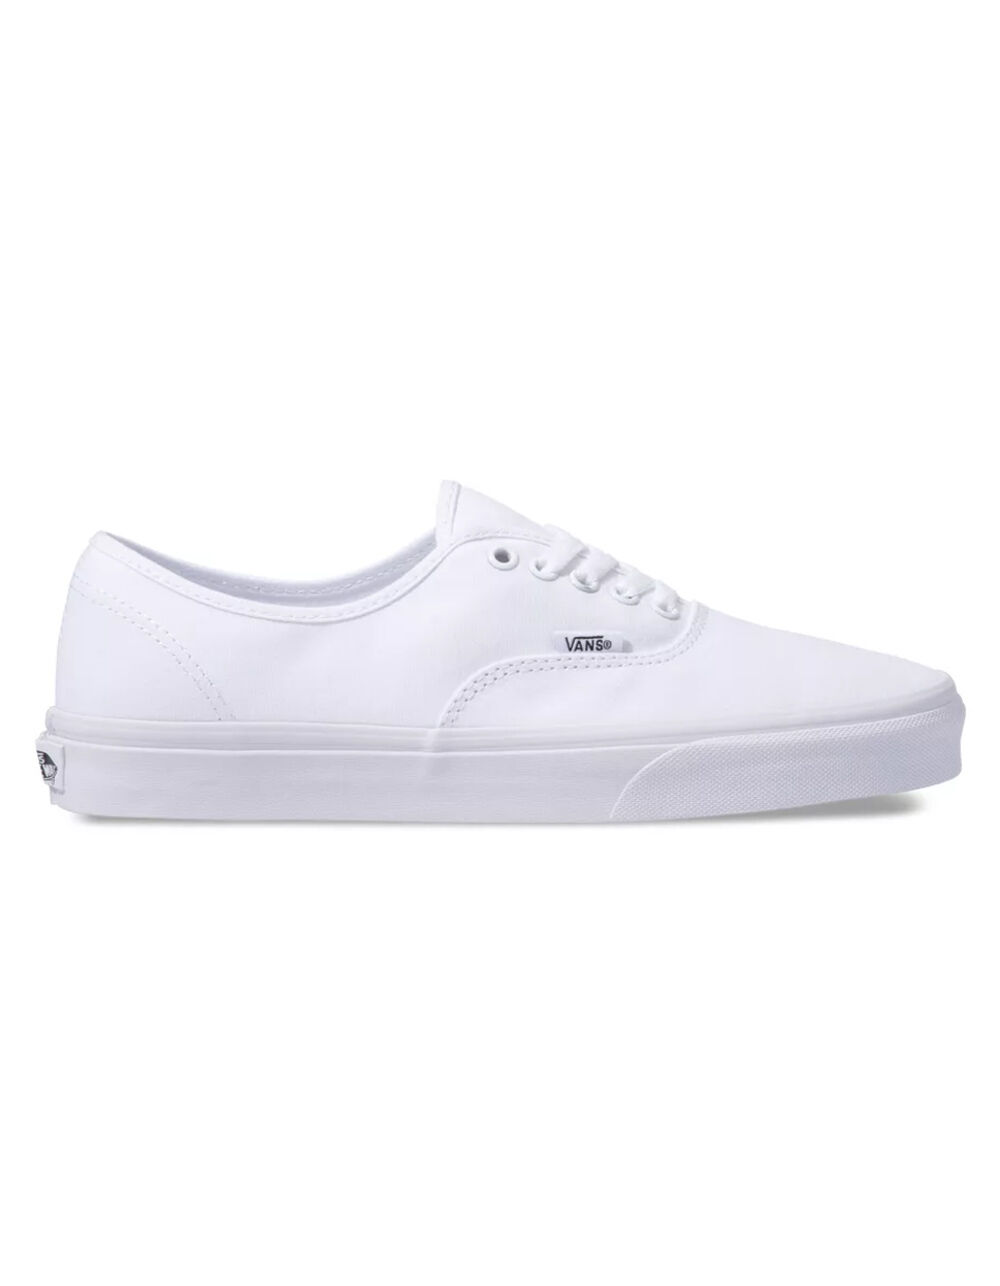 VANS Authentic True White Shoes - WHITE | Tillys